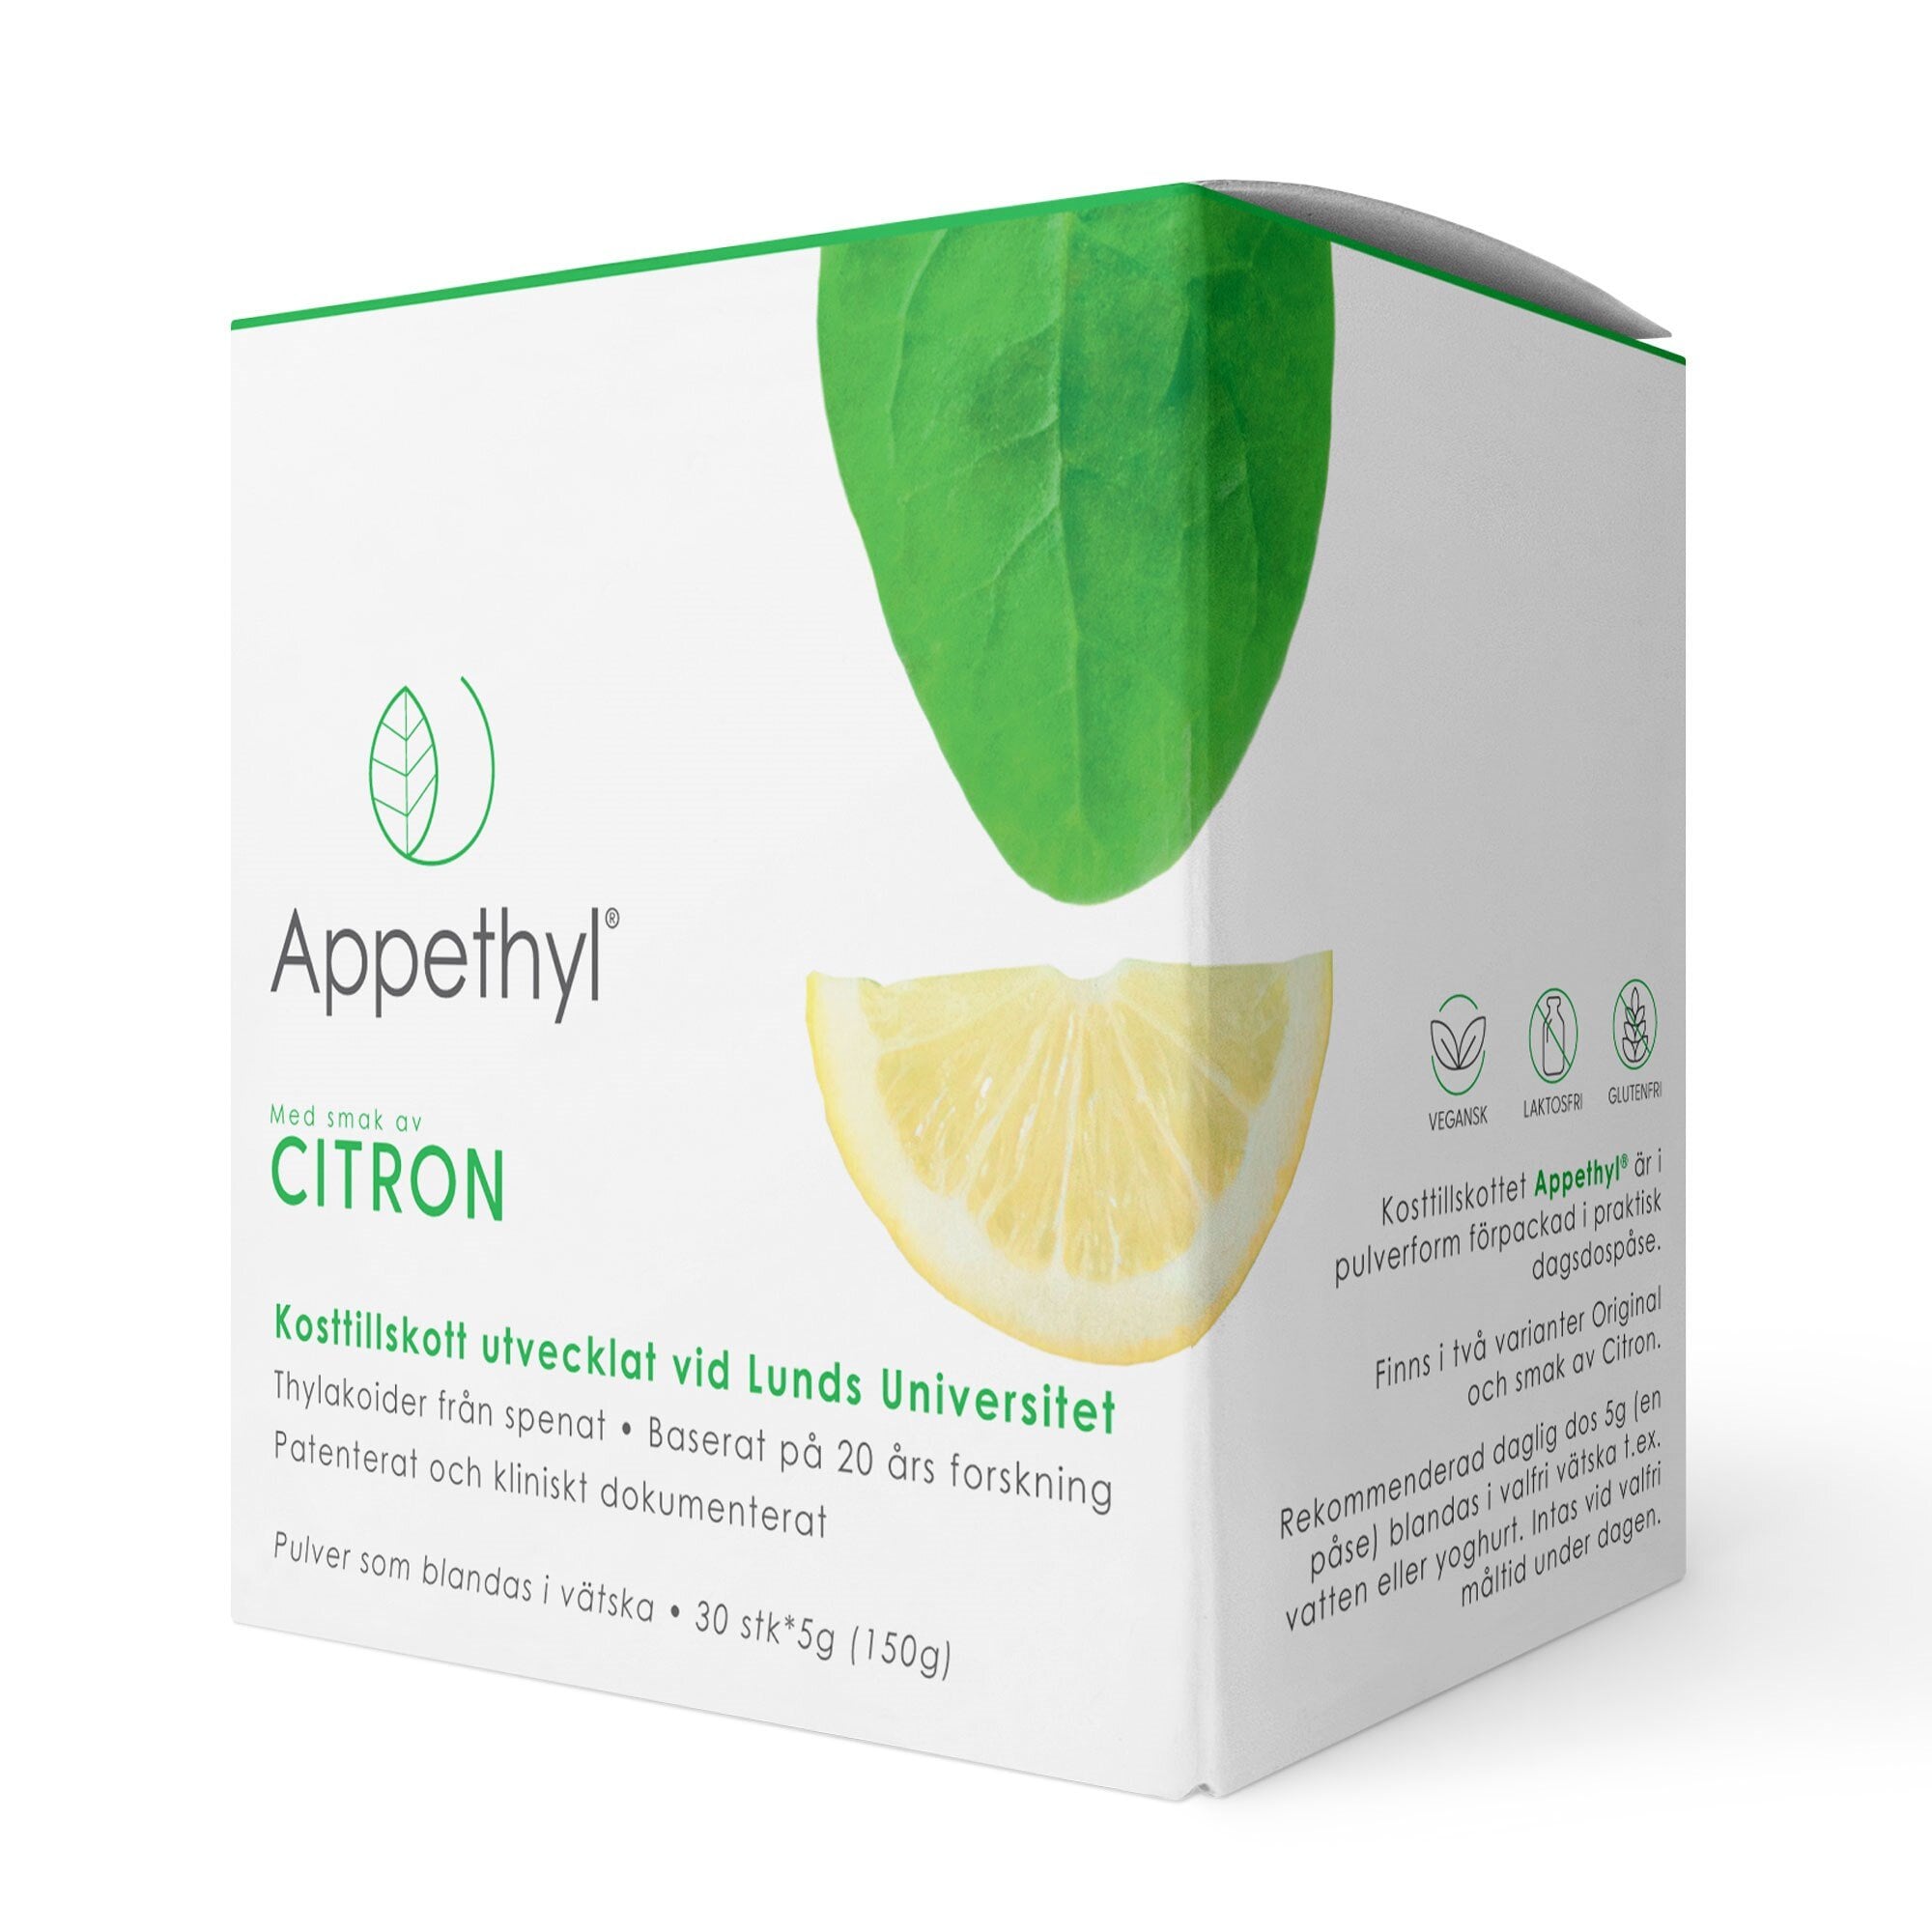 Appethyl Citron